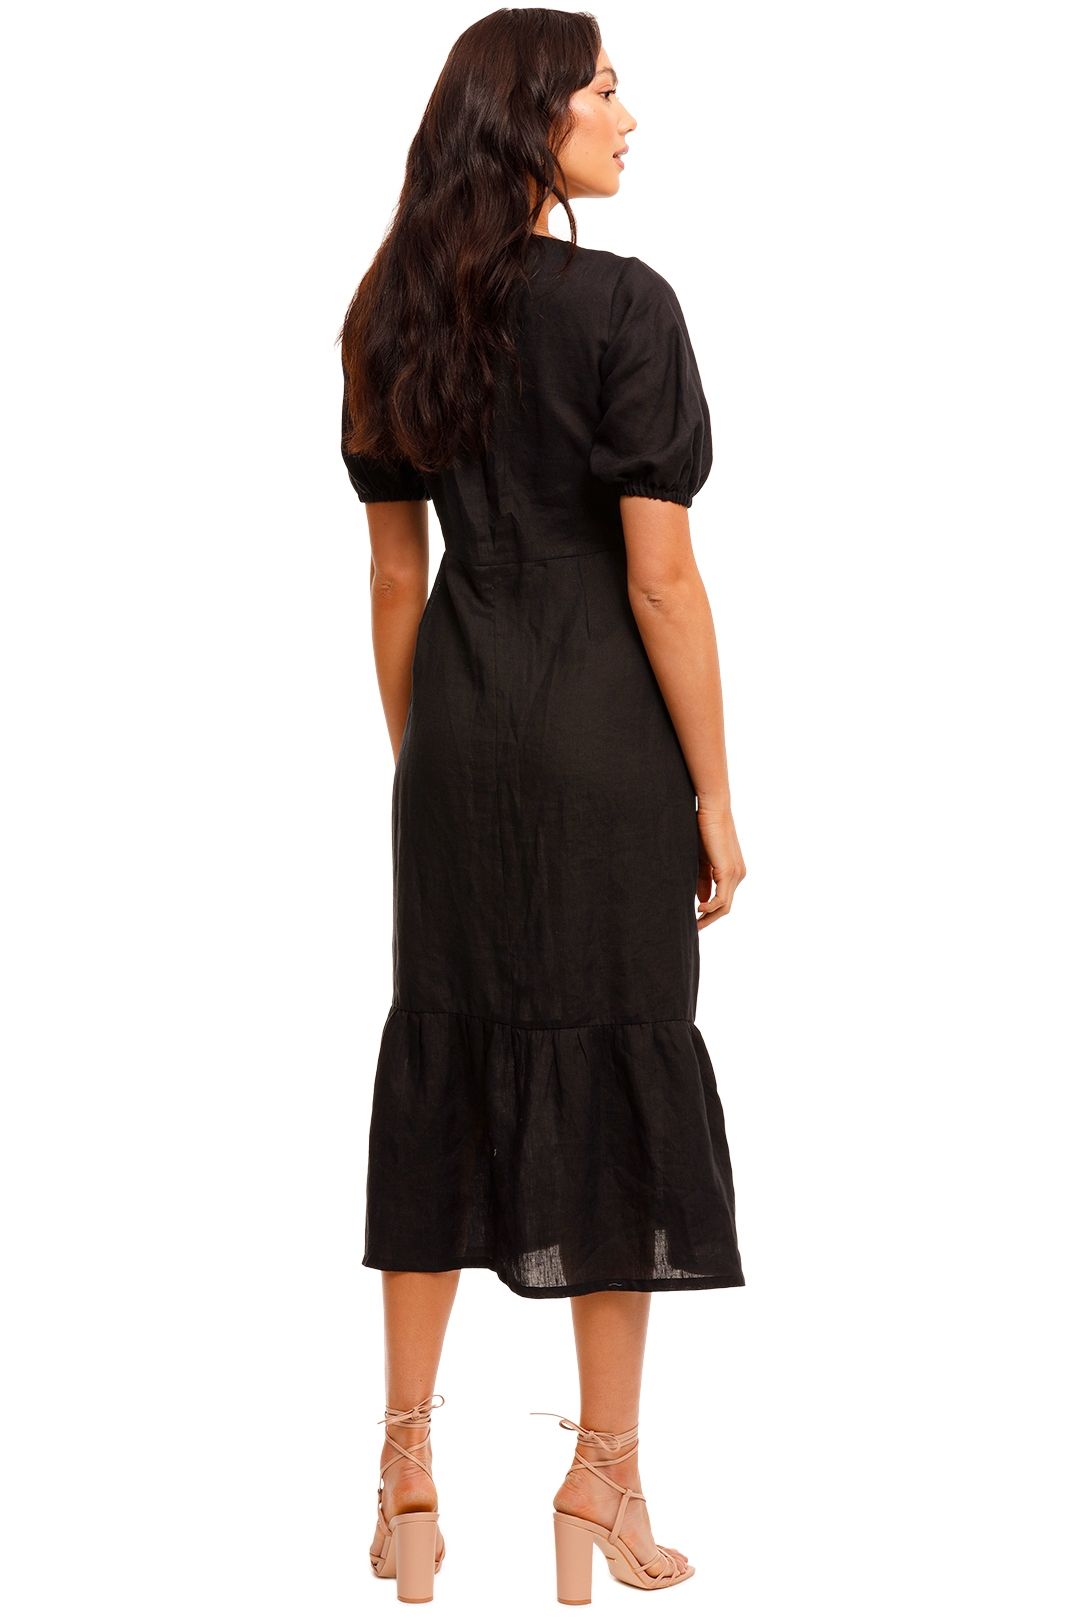 Jillian Boustred Liberty Dress Black Maxi